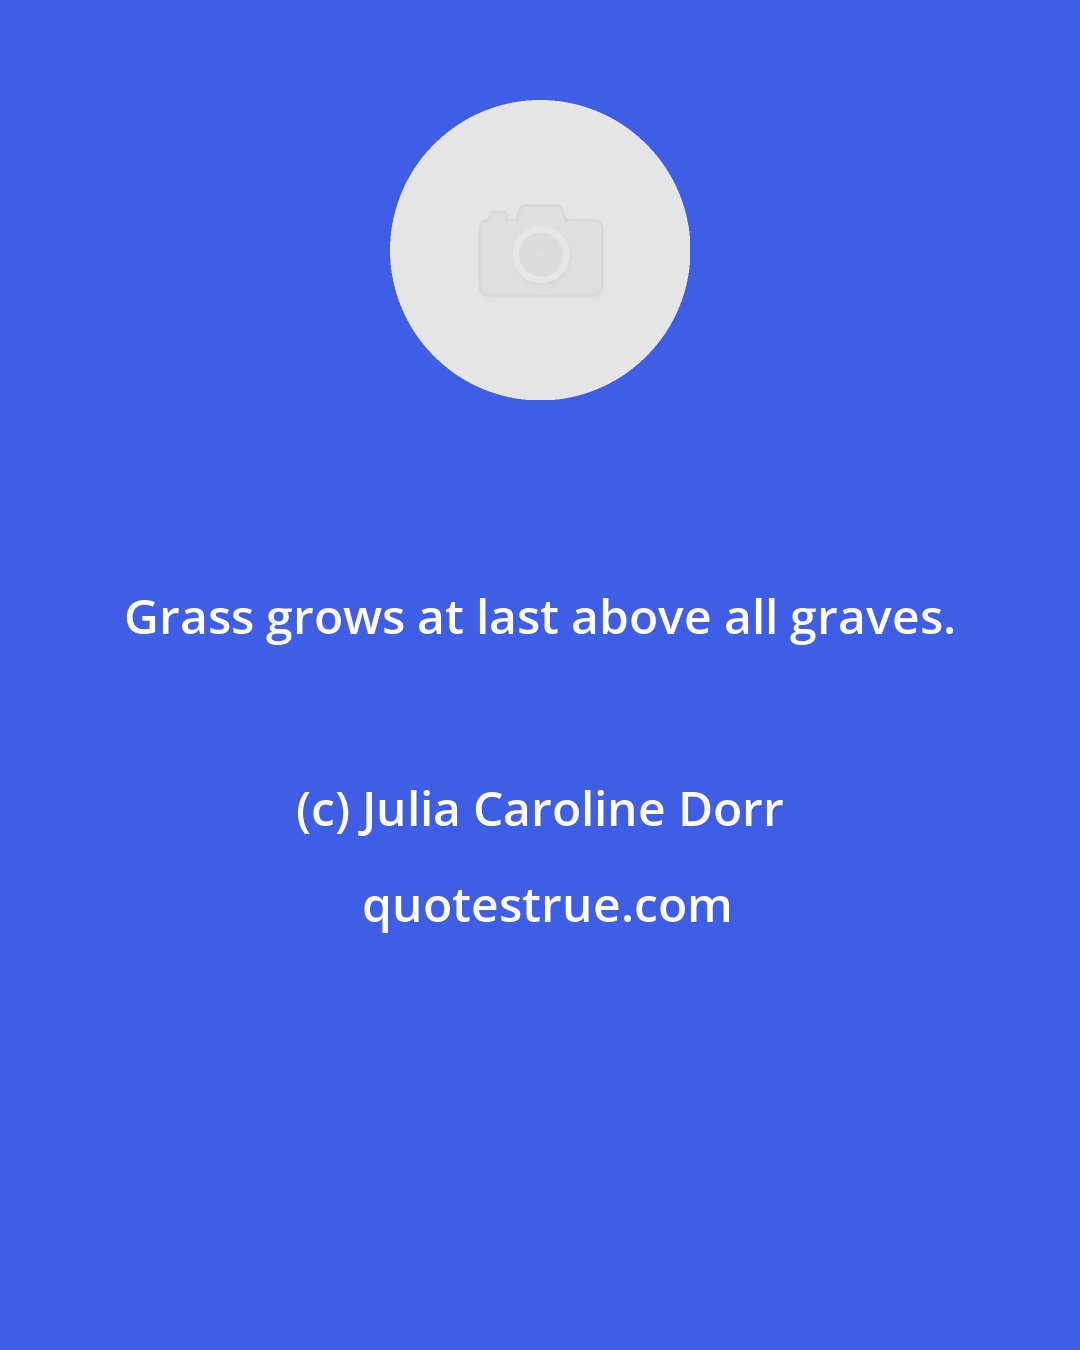 Julia Caroline Dorr: Grass grows at last above all graves.